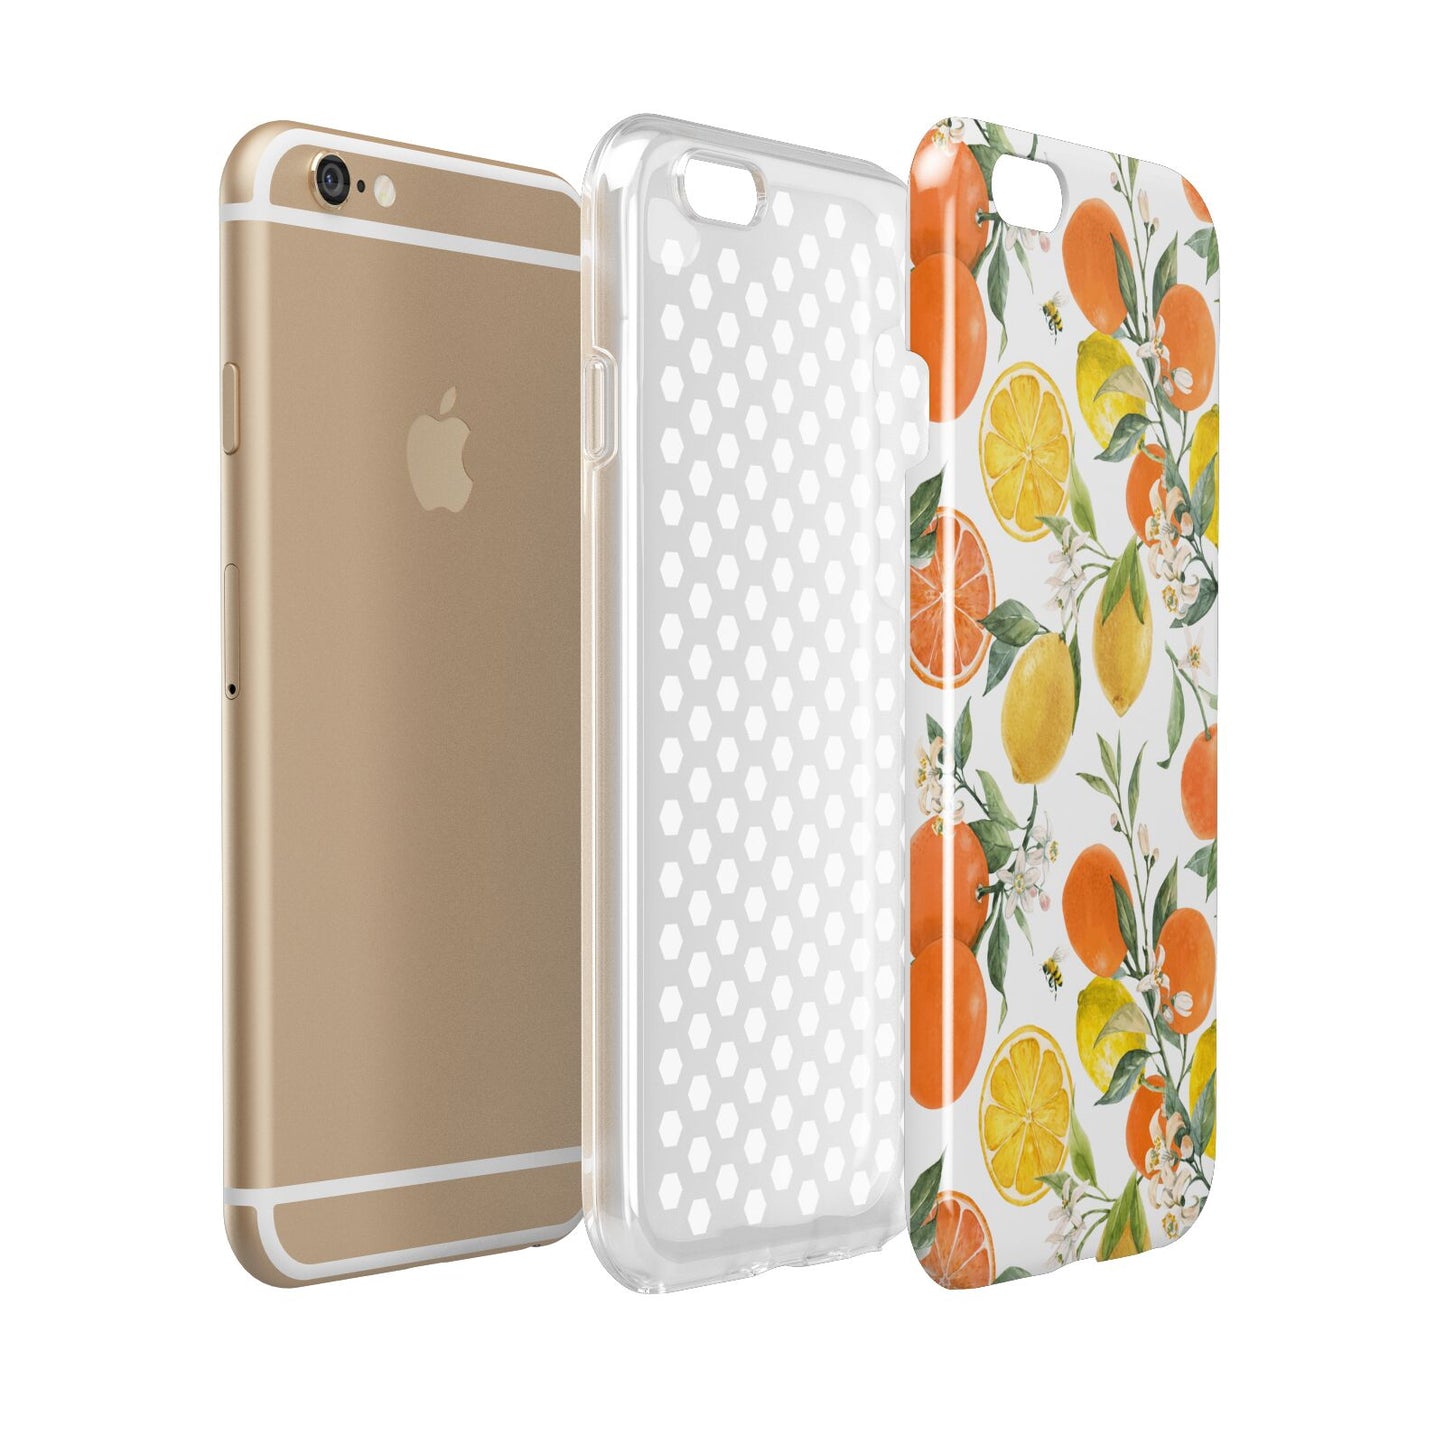 Lemons and Oranges Apple iPhone 6 3D Tough Case Expanded view